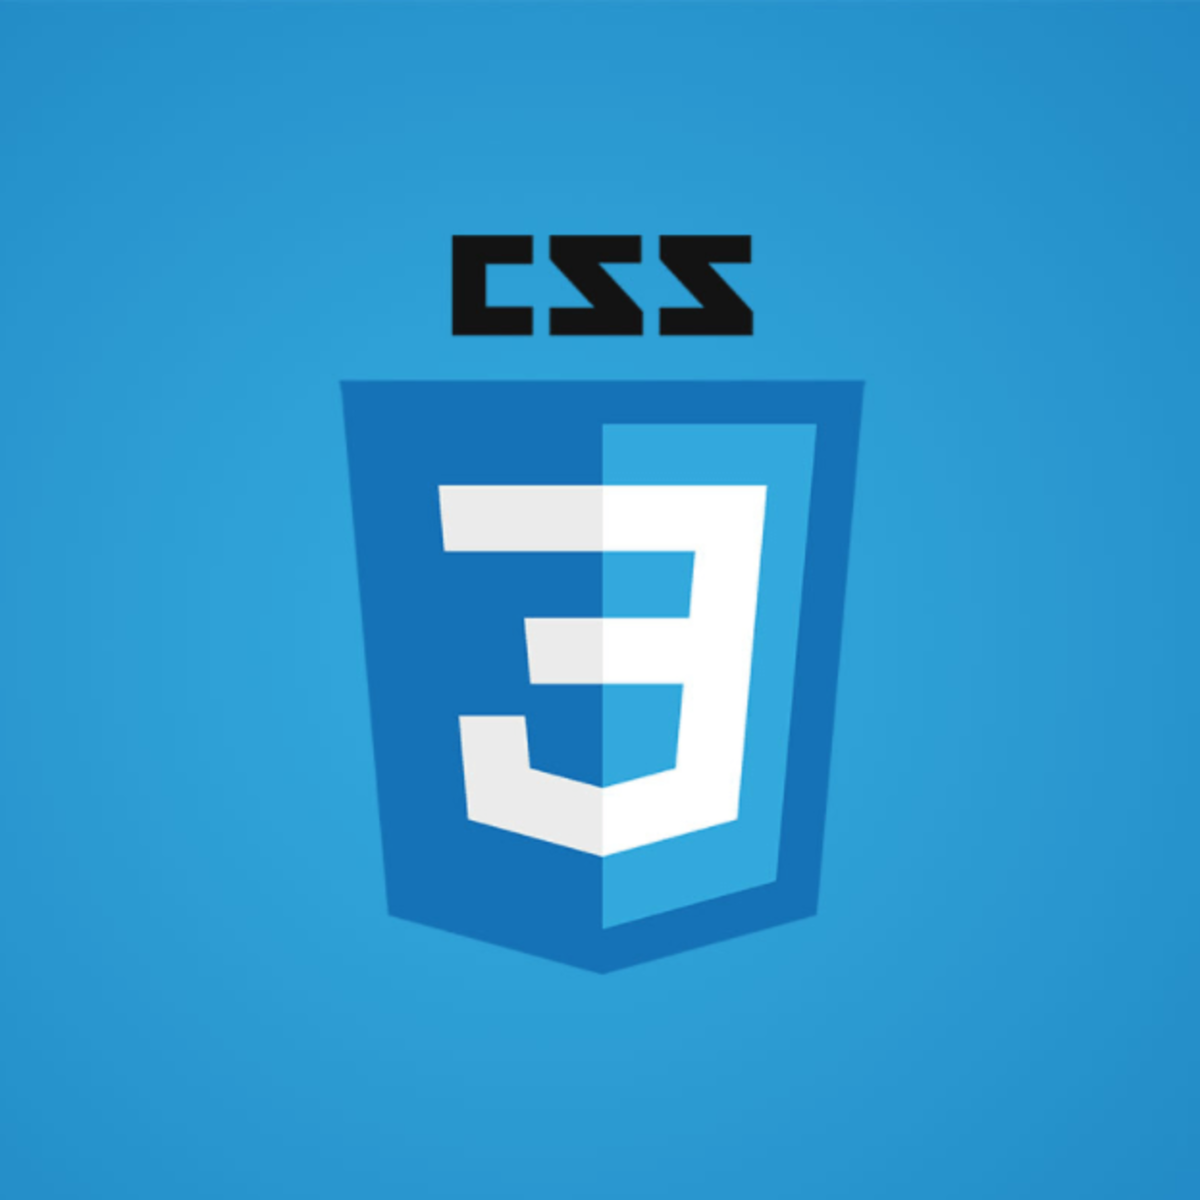 20 div 3. Css3. CSS логотип. Значок CSS. Сеы.